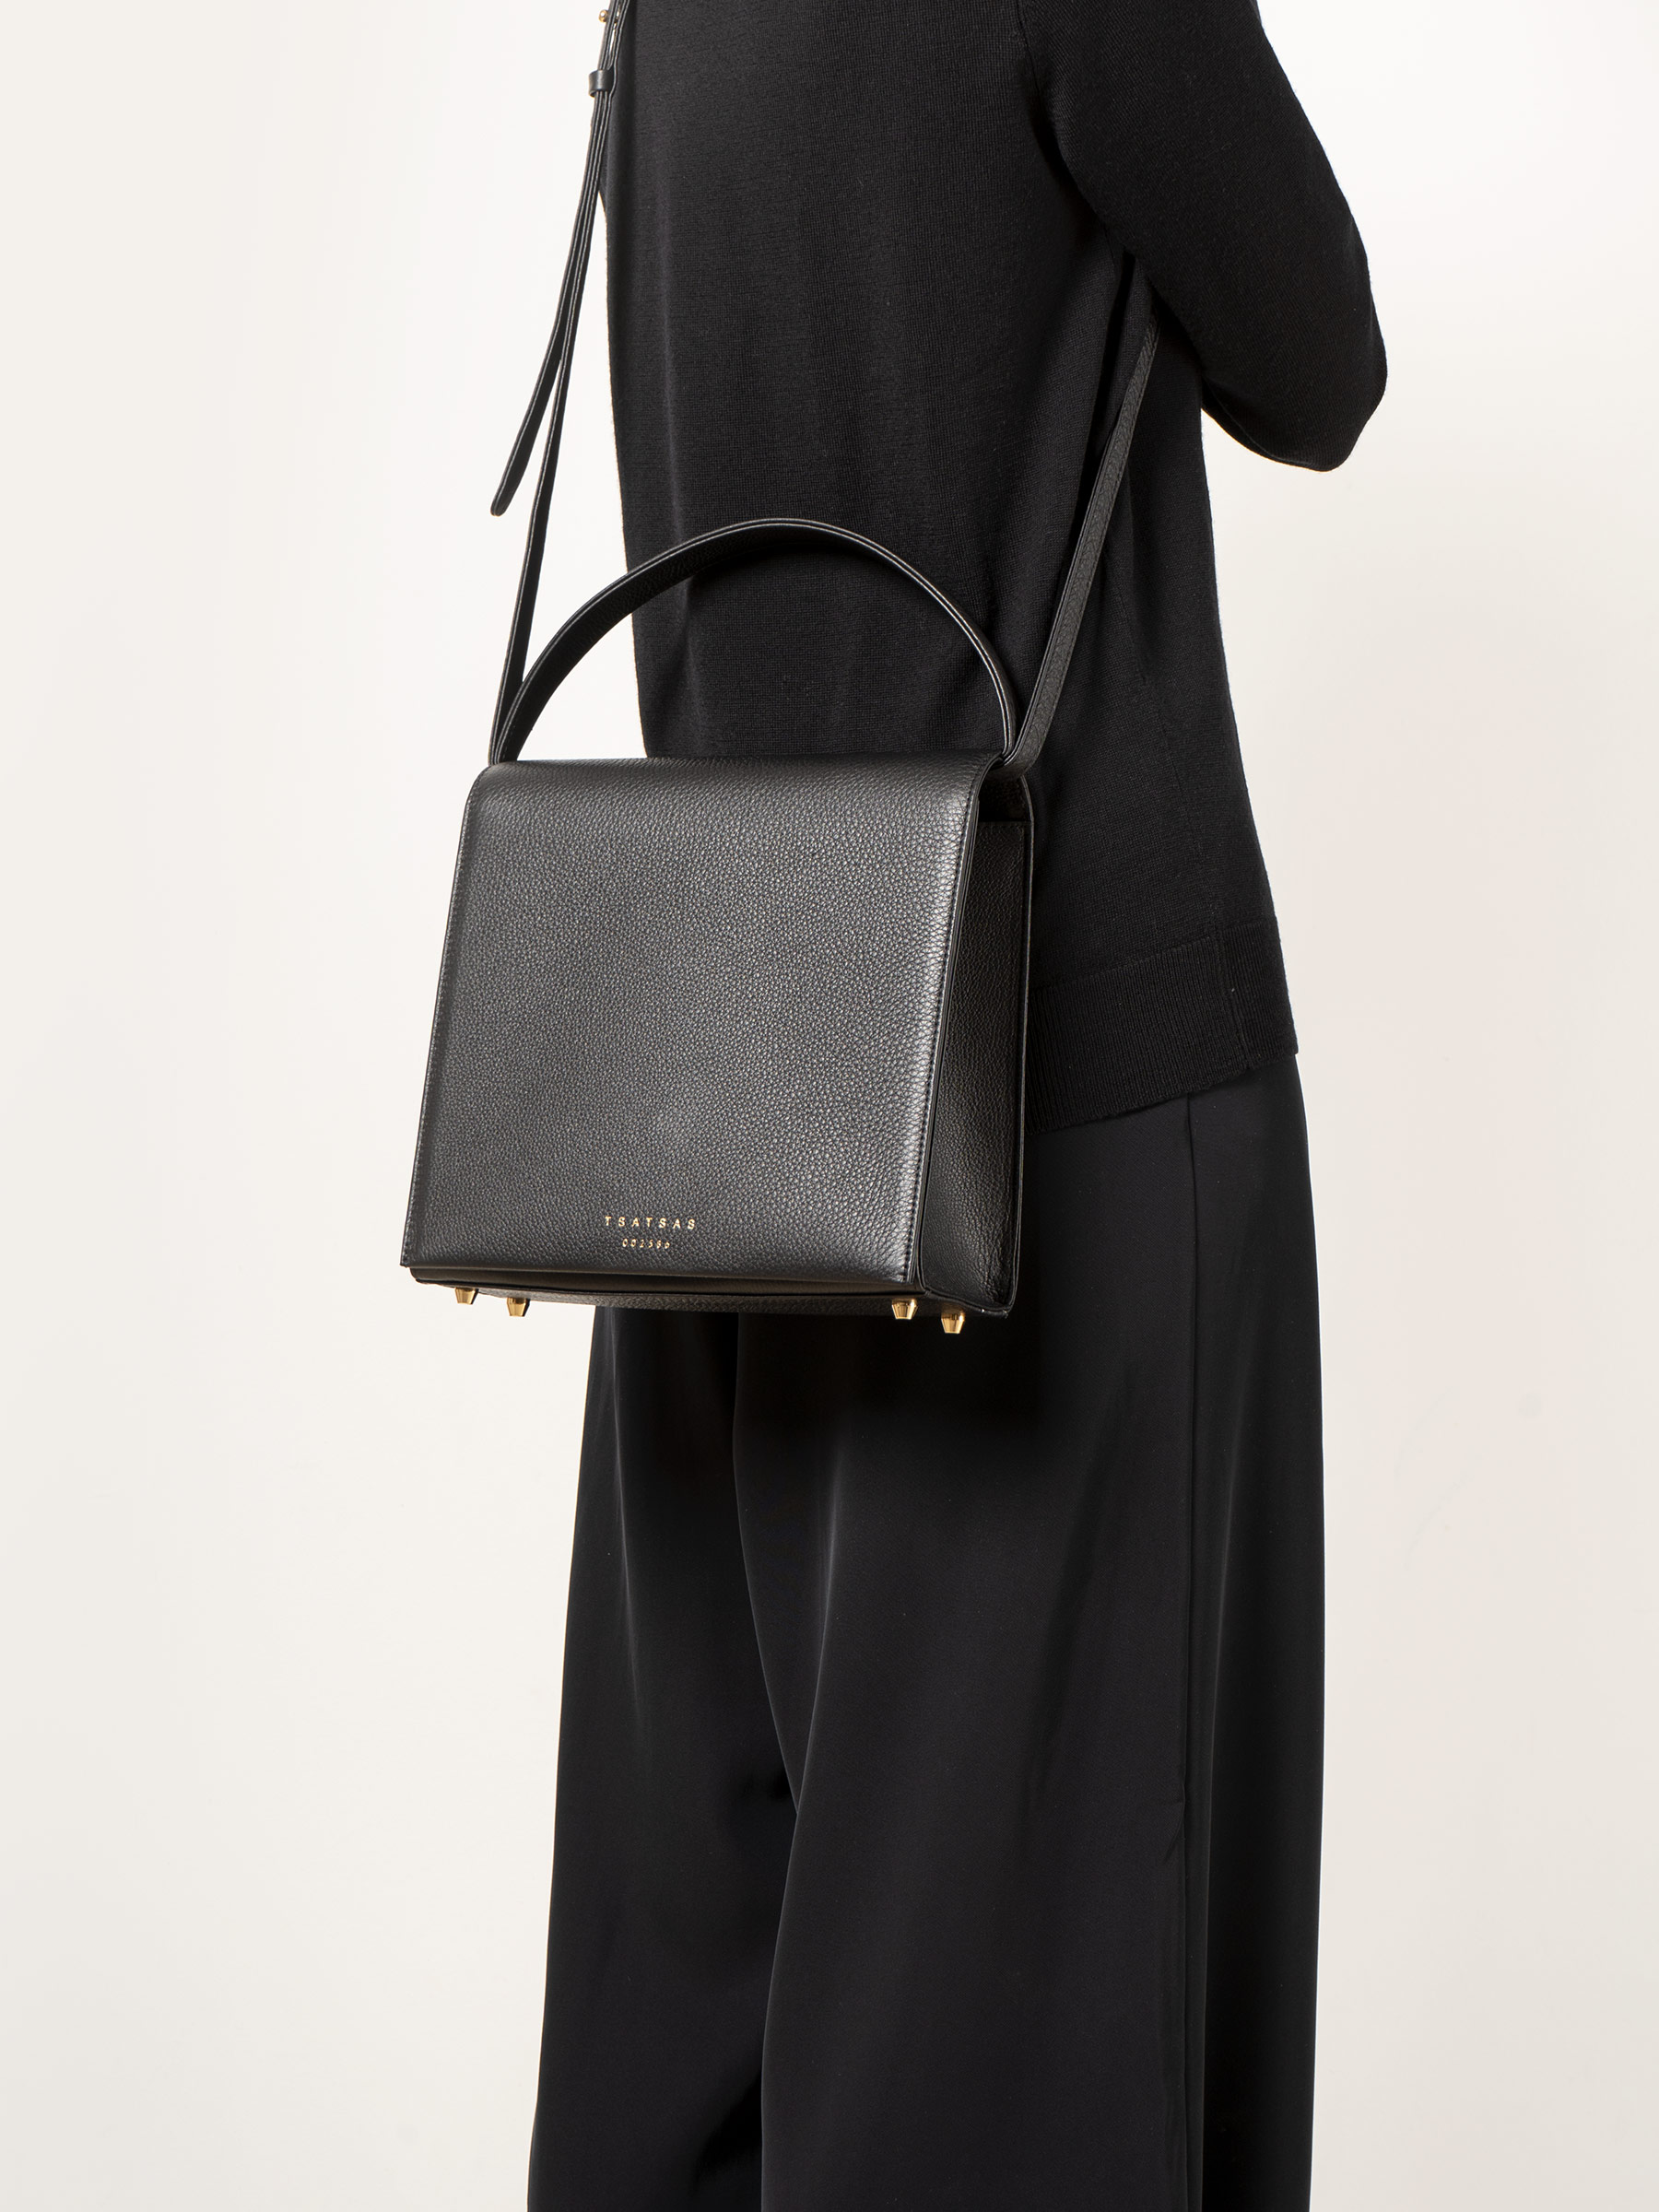 MALVA 5 top handle bag in black calfskin leather | TSATSAS